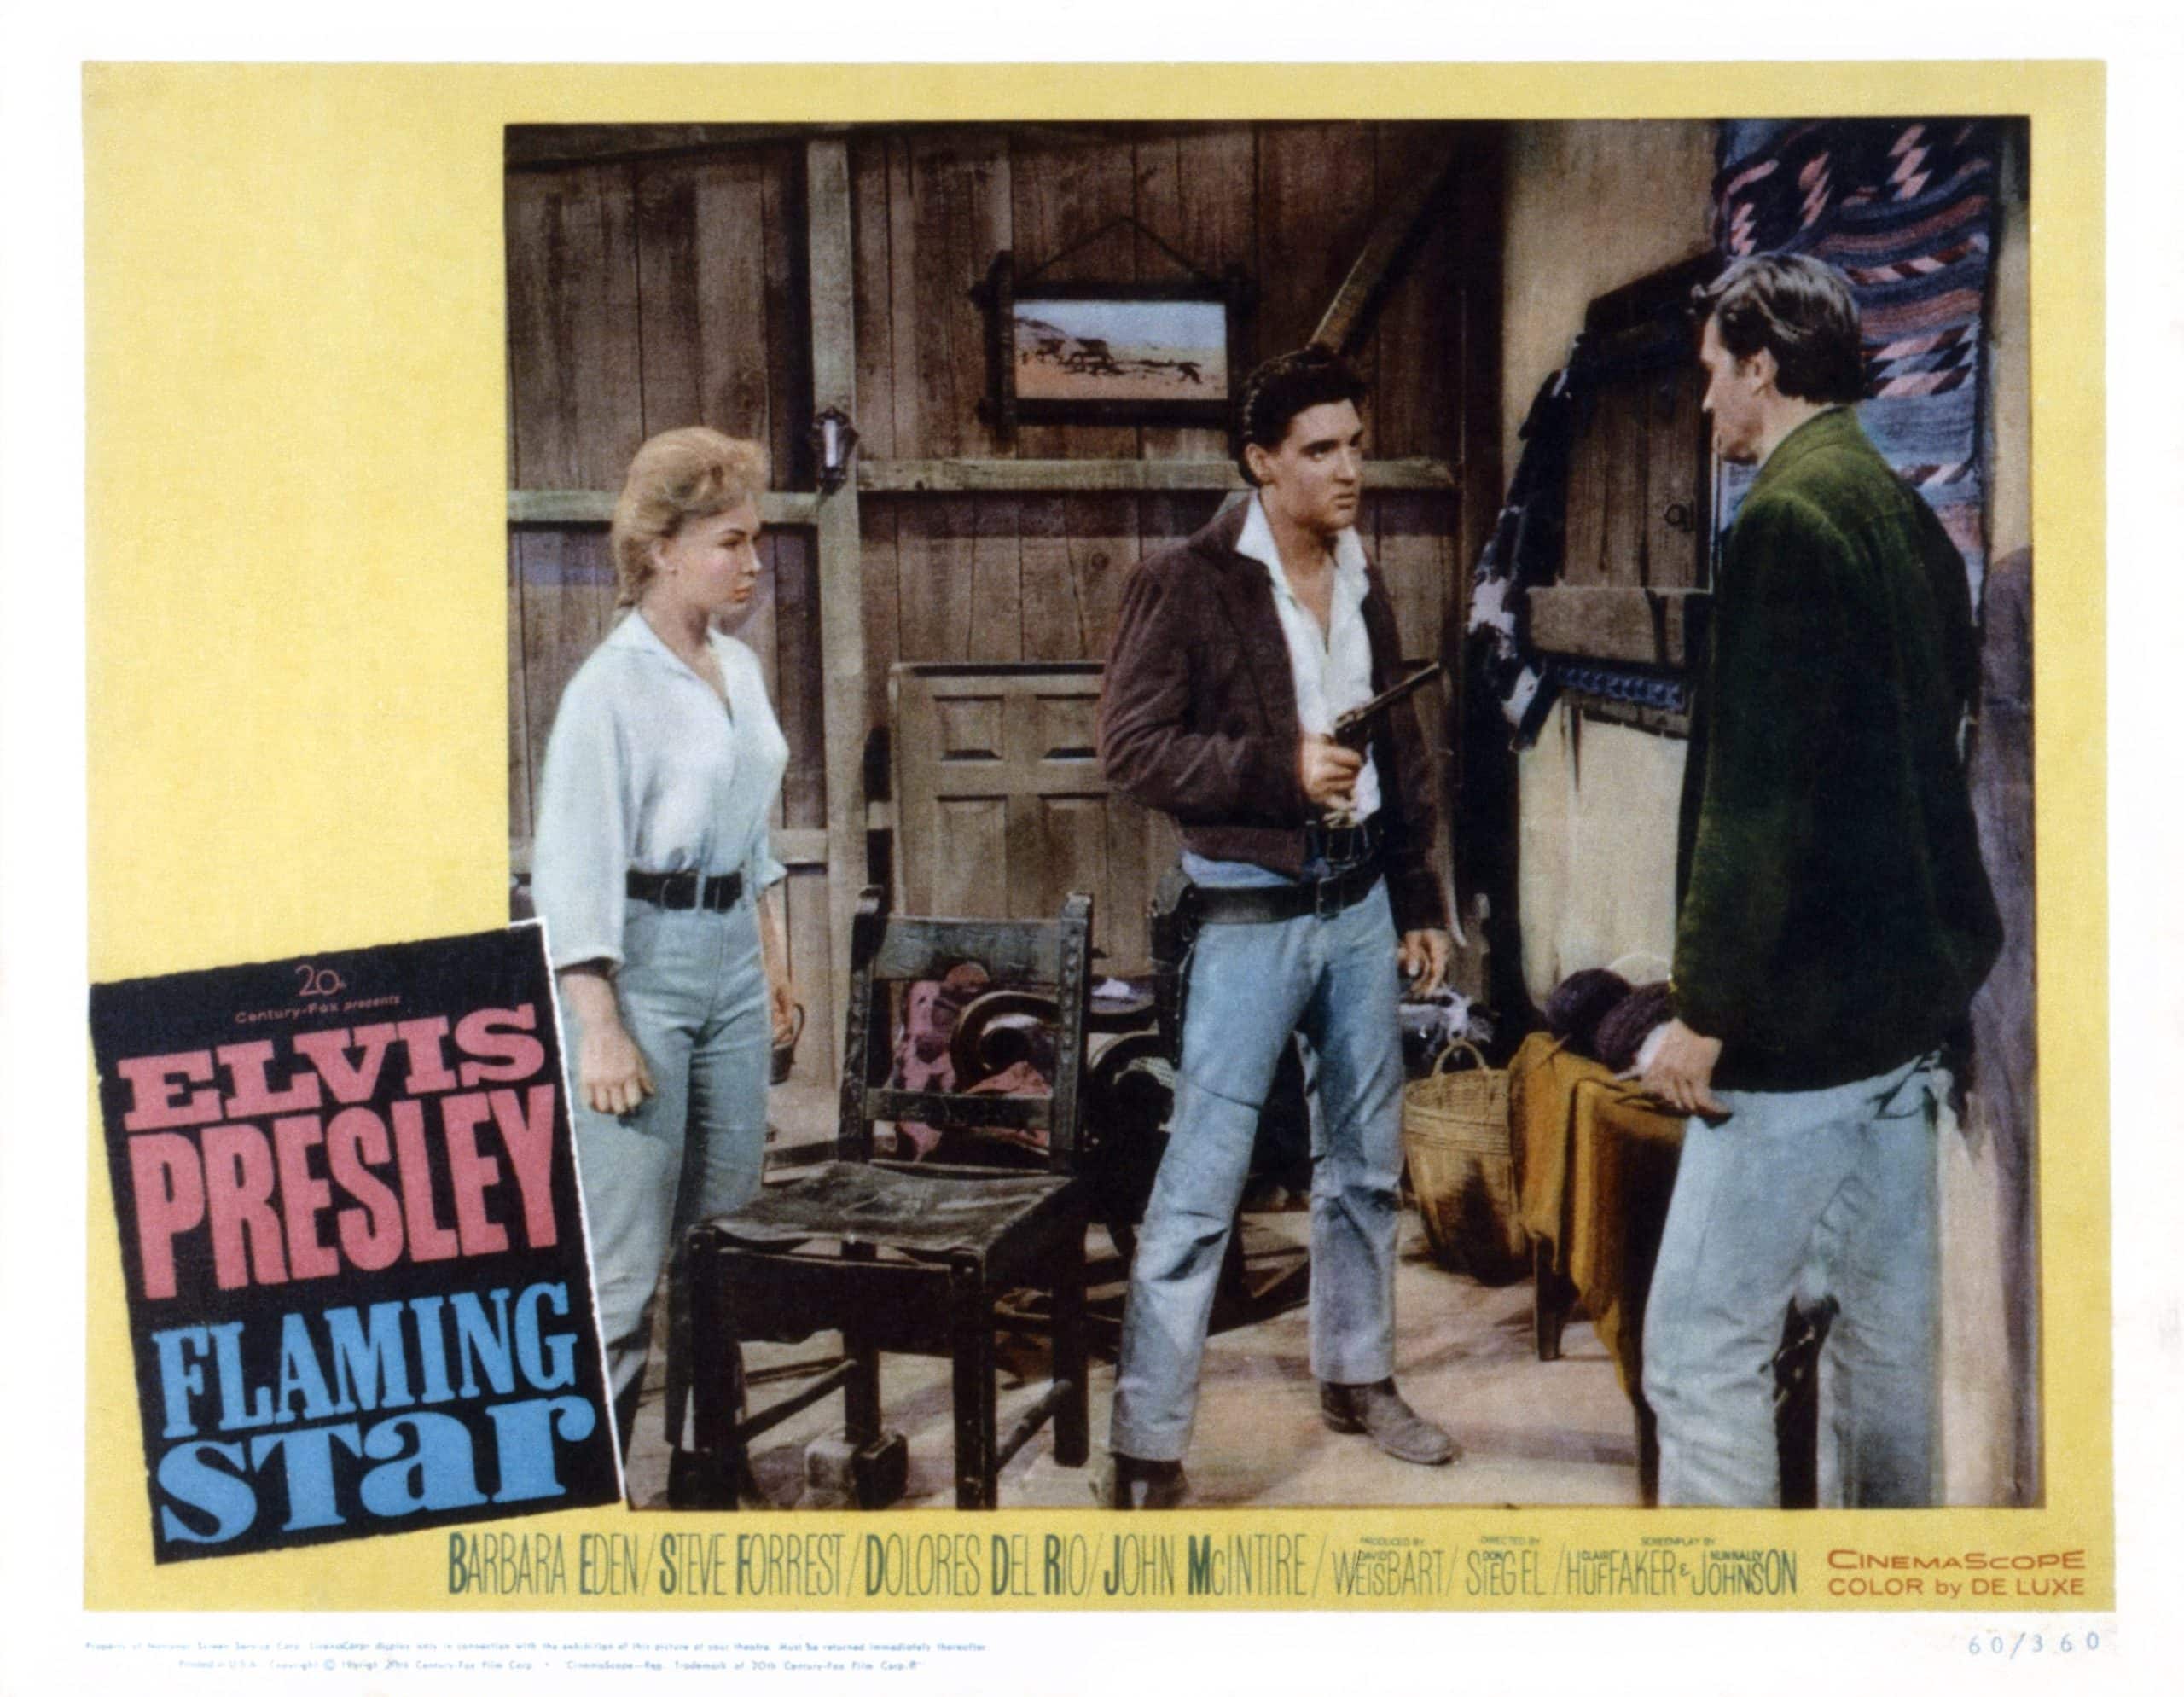 FLAMING STAR, US lobbycard, from left: Barbara Eden, Elvis Presley, Steve Forrest, 1960